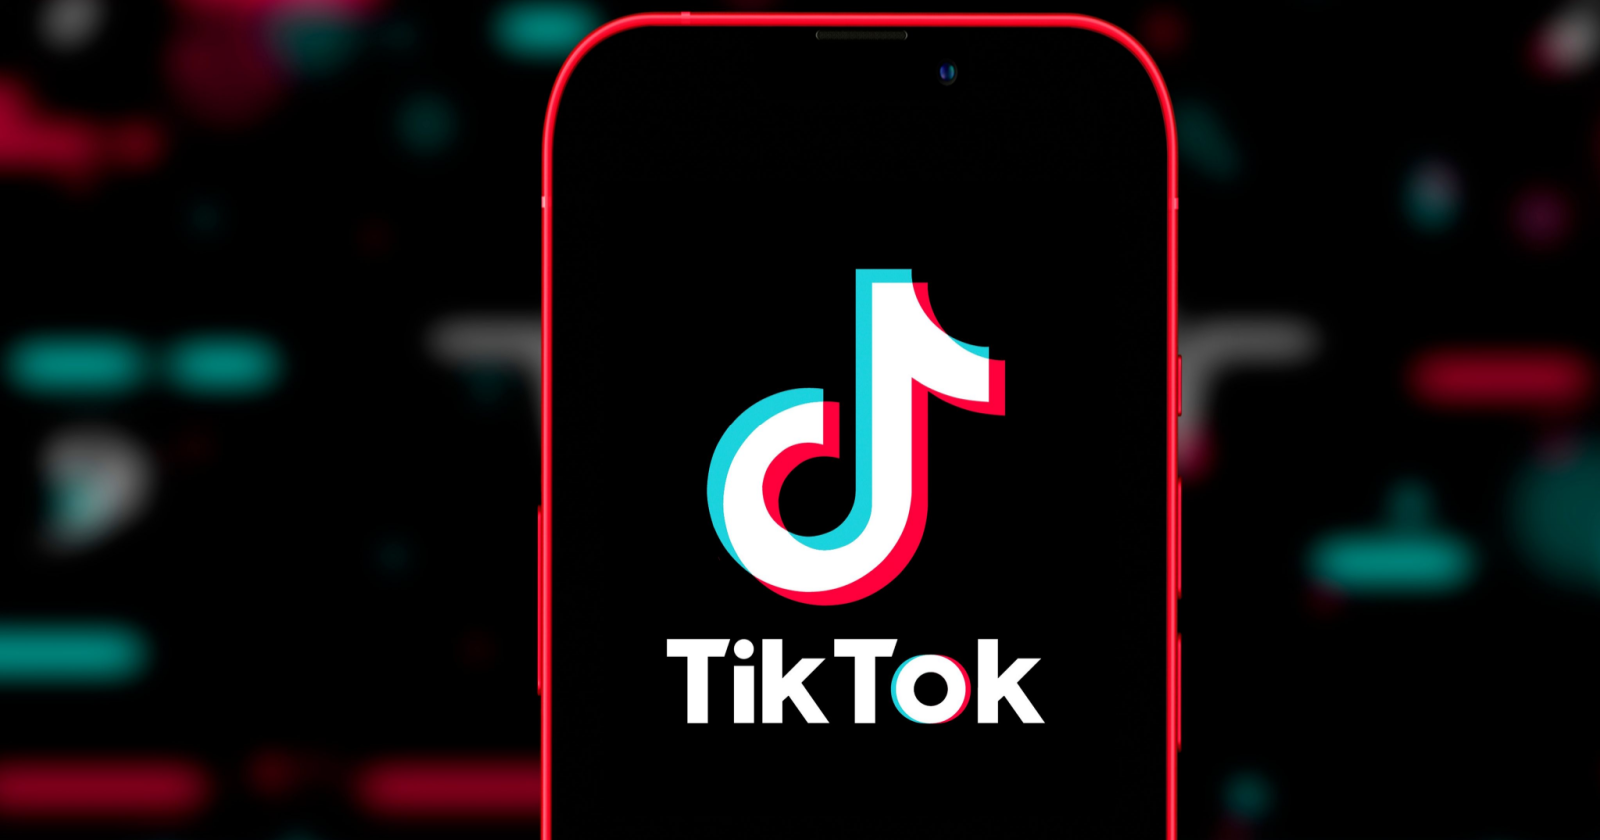 Find Someone’s Instagram Account from TikTok